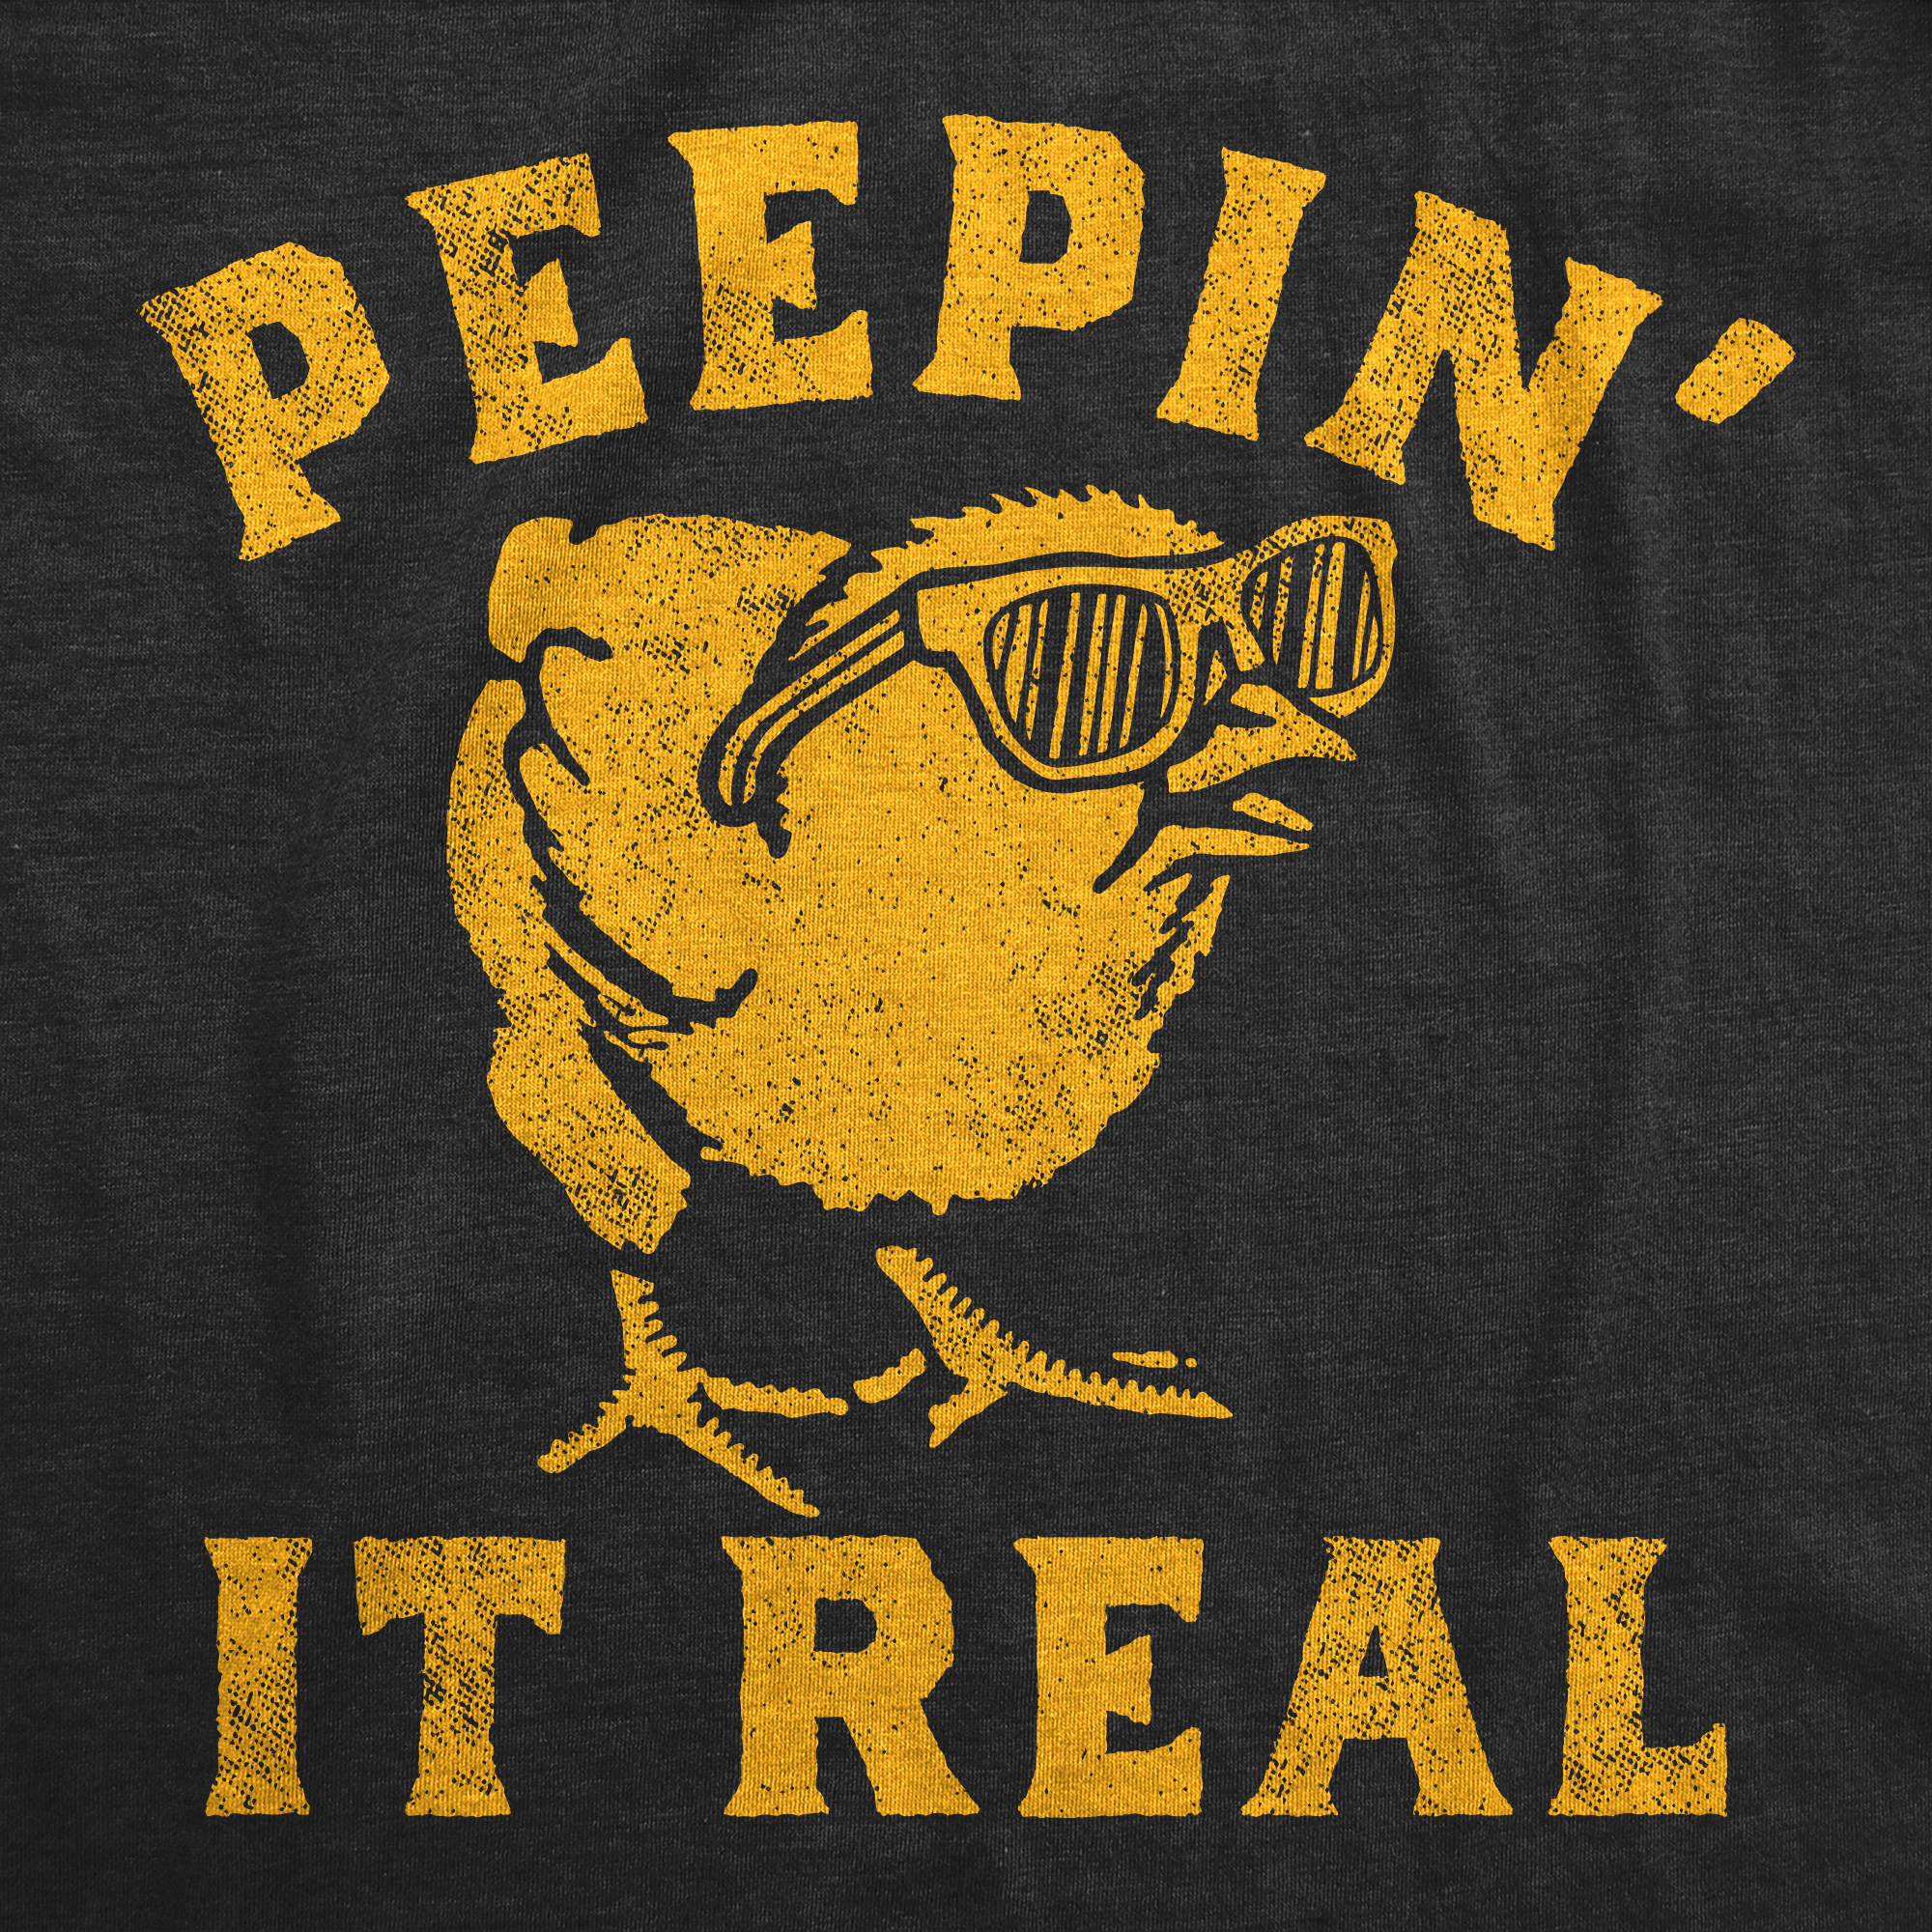 Funny Heather Black - Peepin It Real Peepin It Real Mens T Shirt Nerdy animal Sarcastic Tee